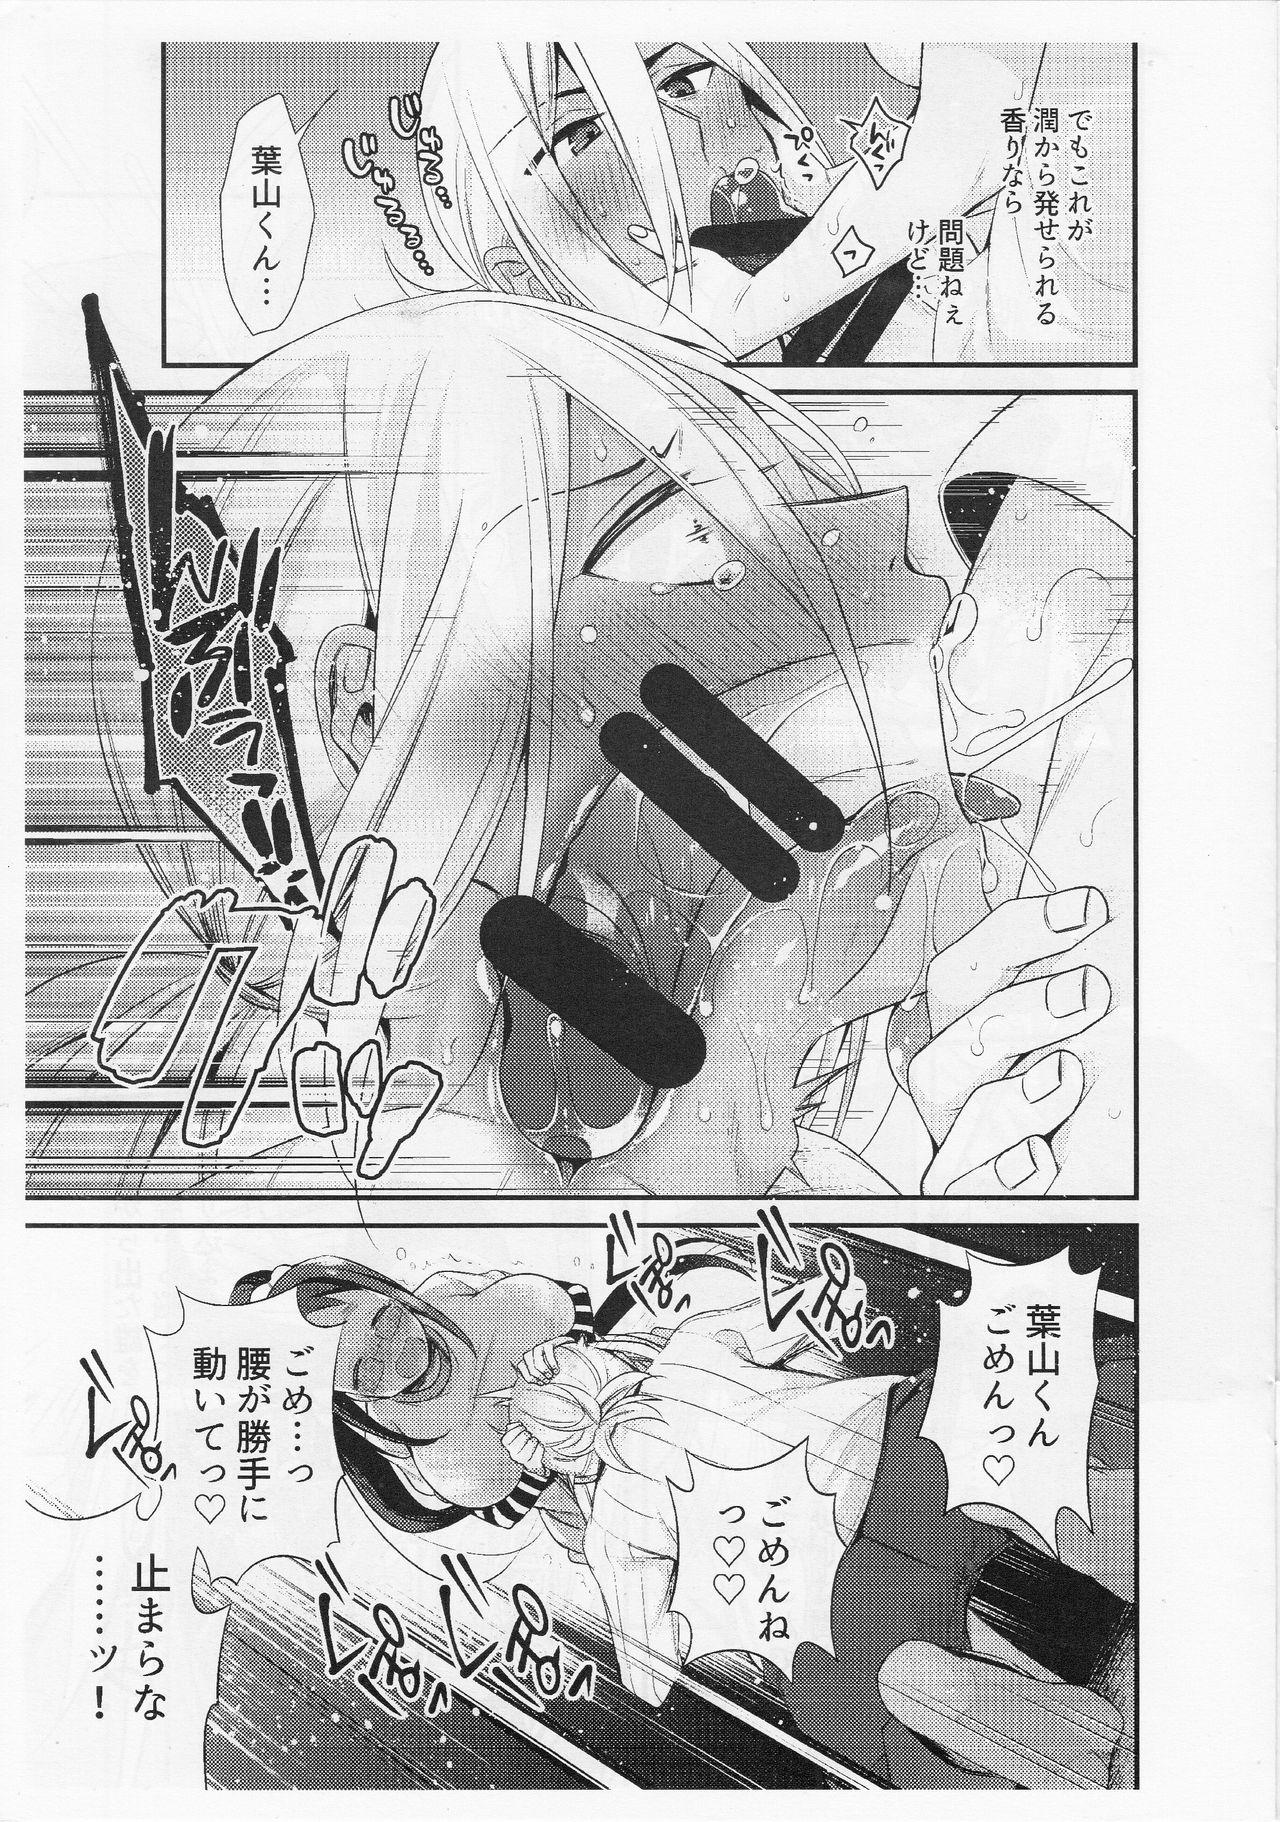 18yo 【コピー誌】助けて!葉山くん - Shokugeki no soma Stream - Page 5